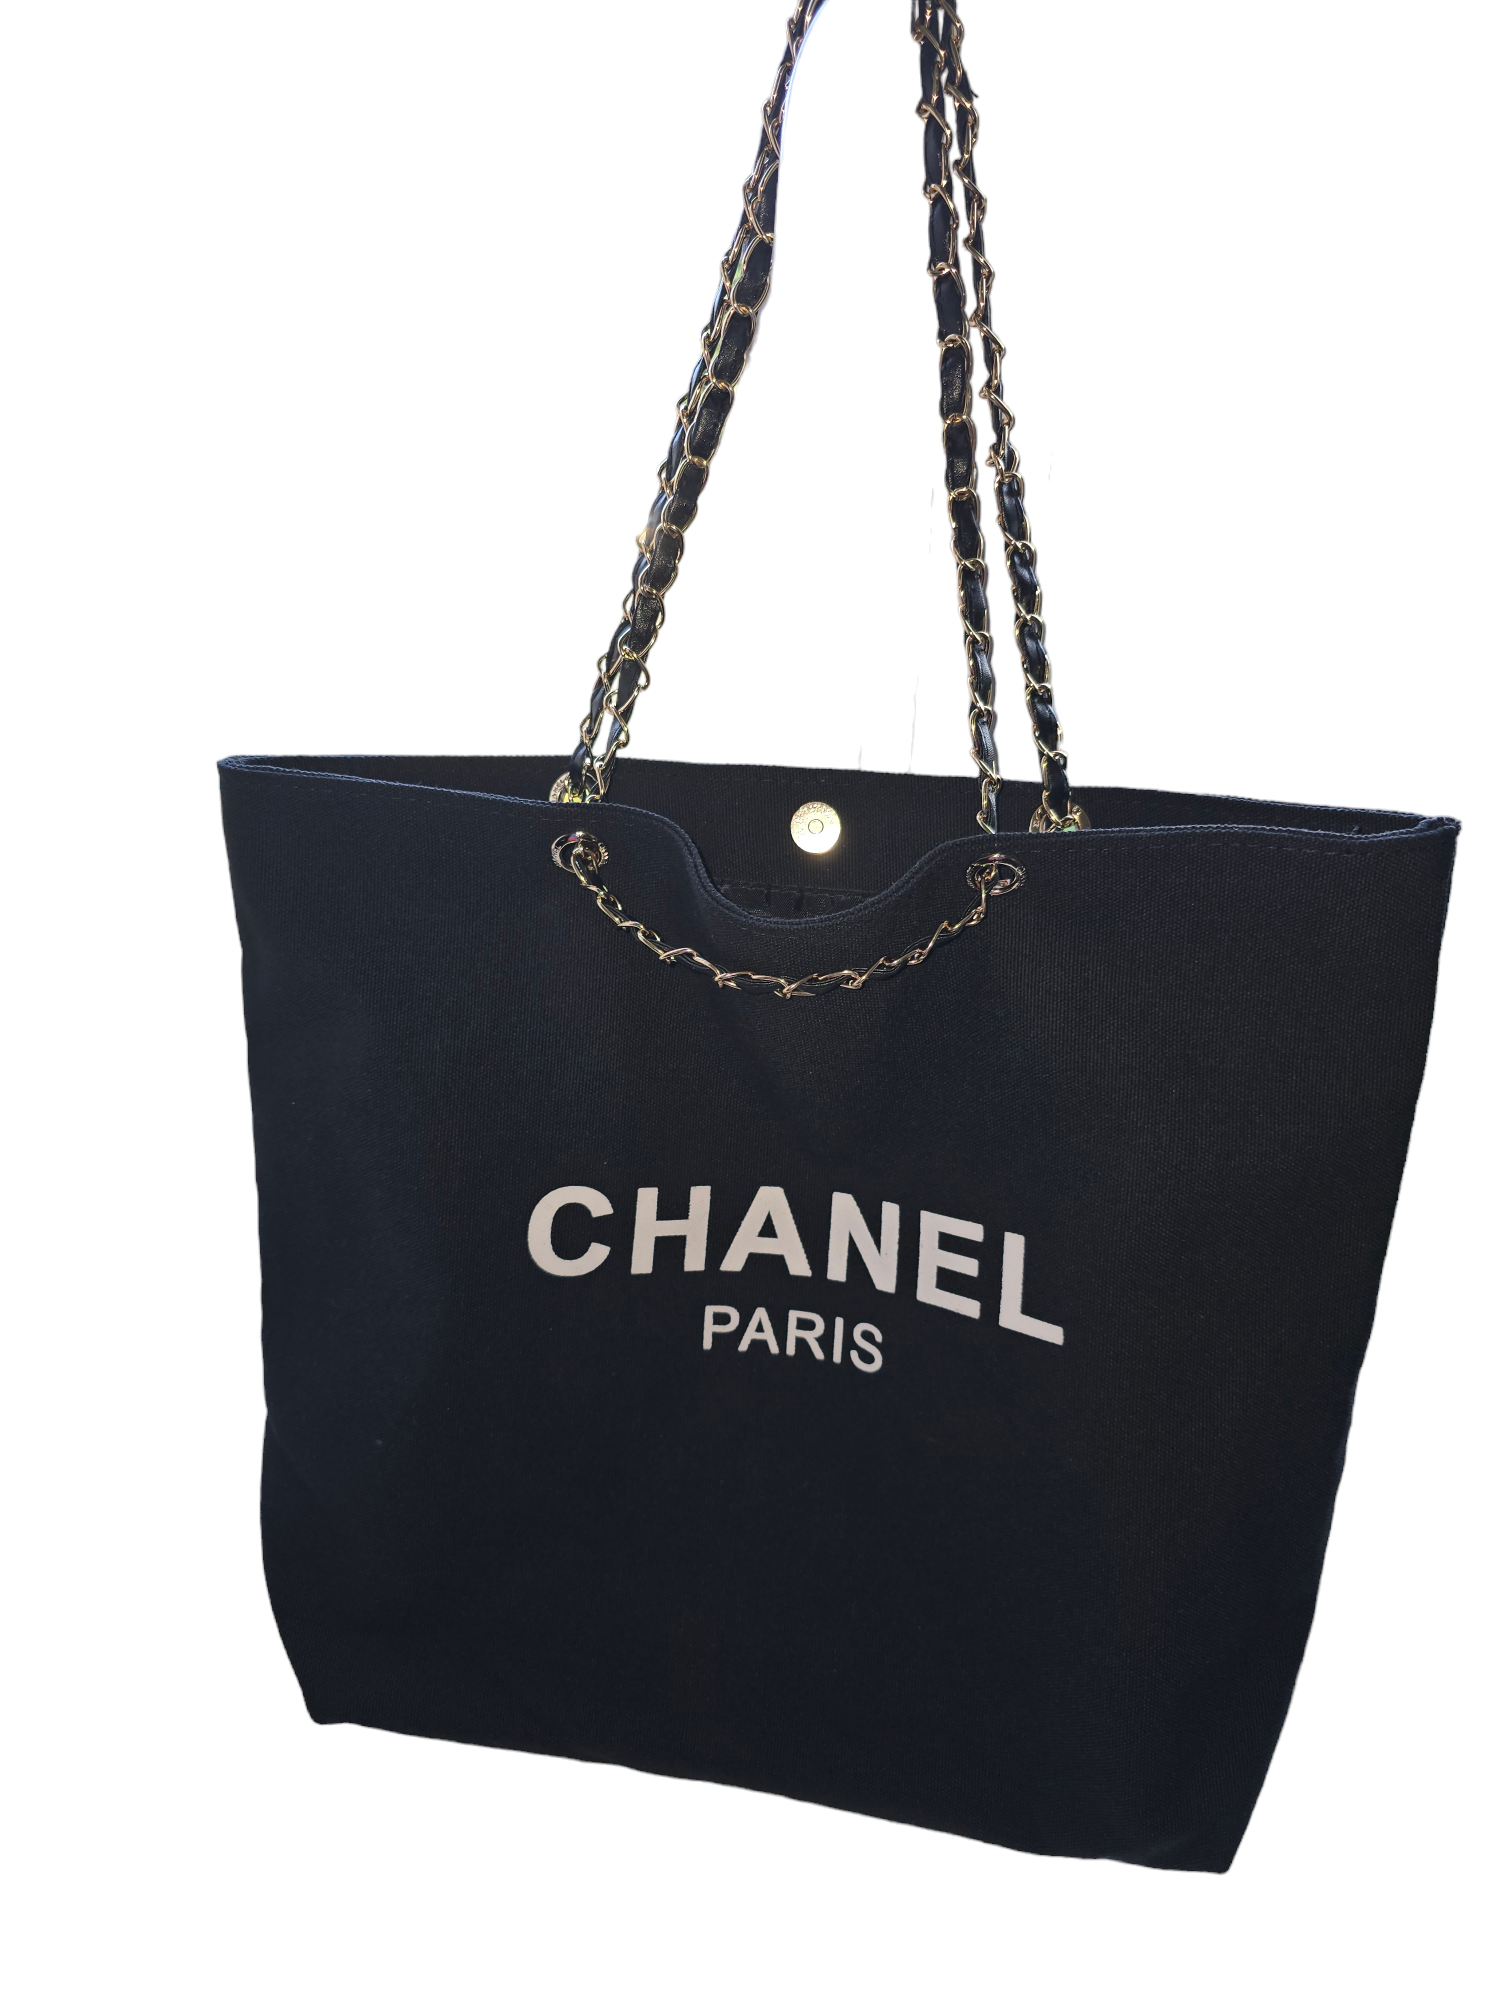 Chanel Paris VIP Tote Bag